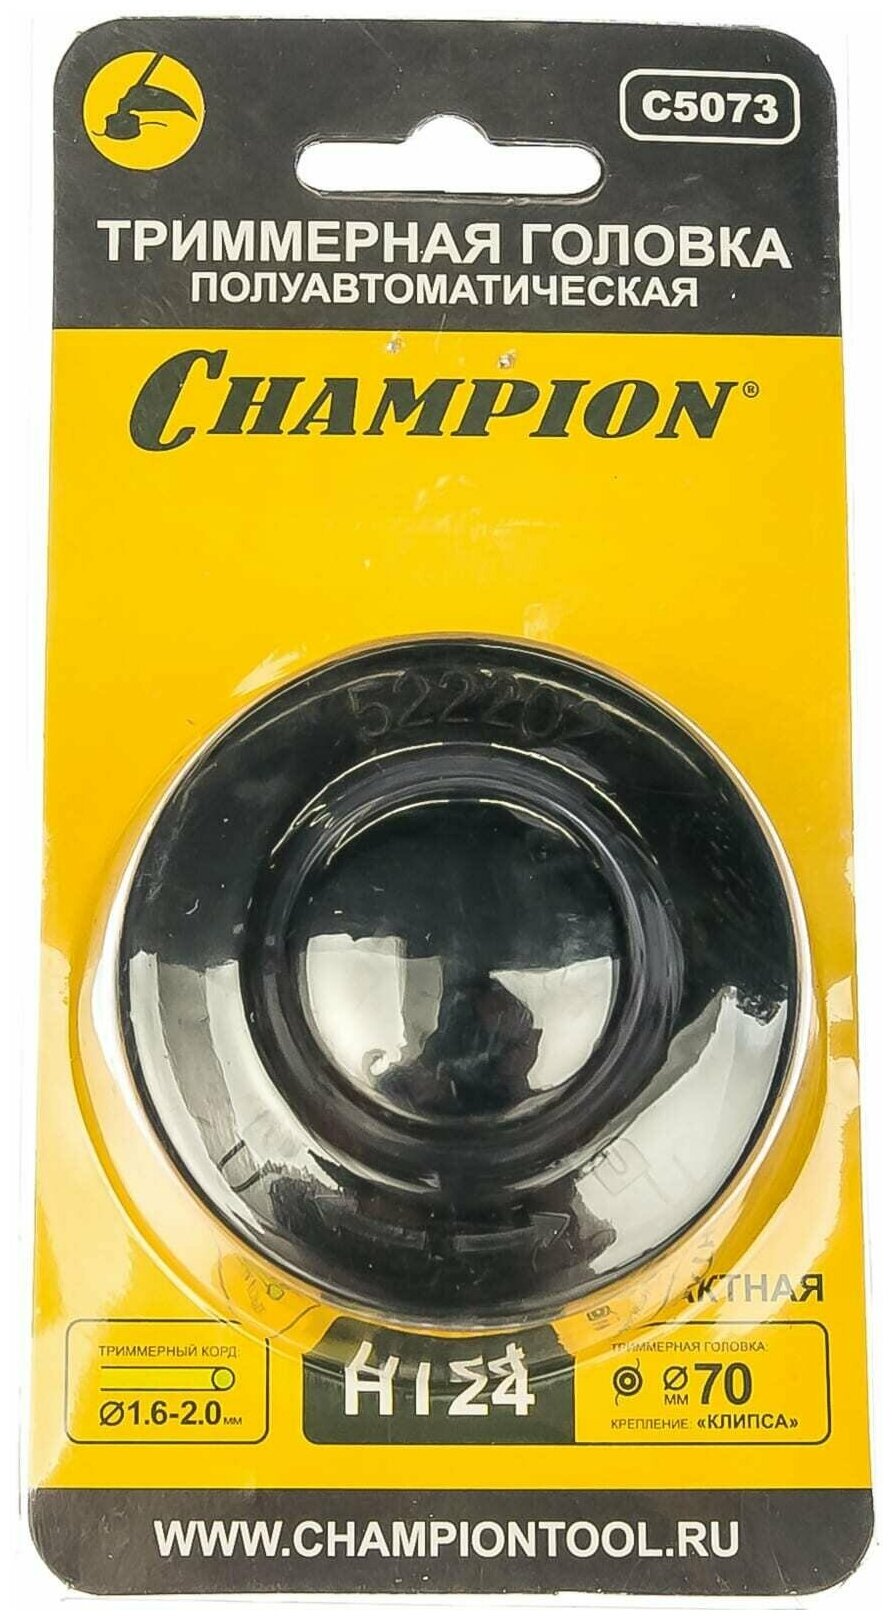 Катушка для триммера Champion HT24 компактная C5073 - фото №4